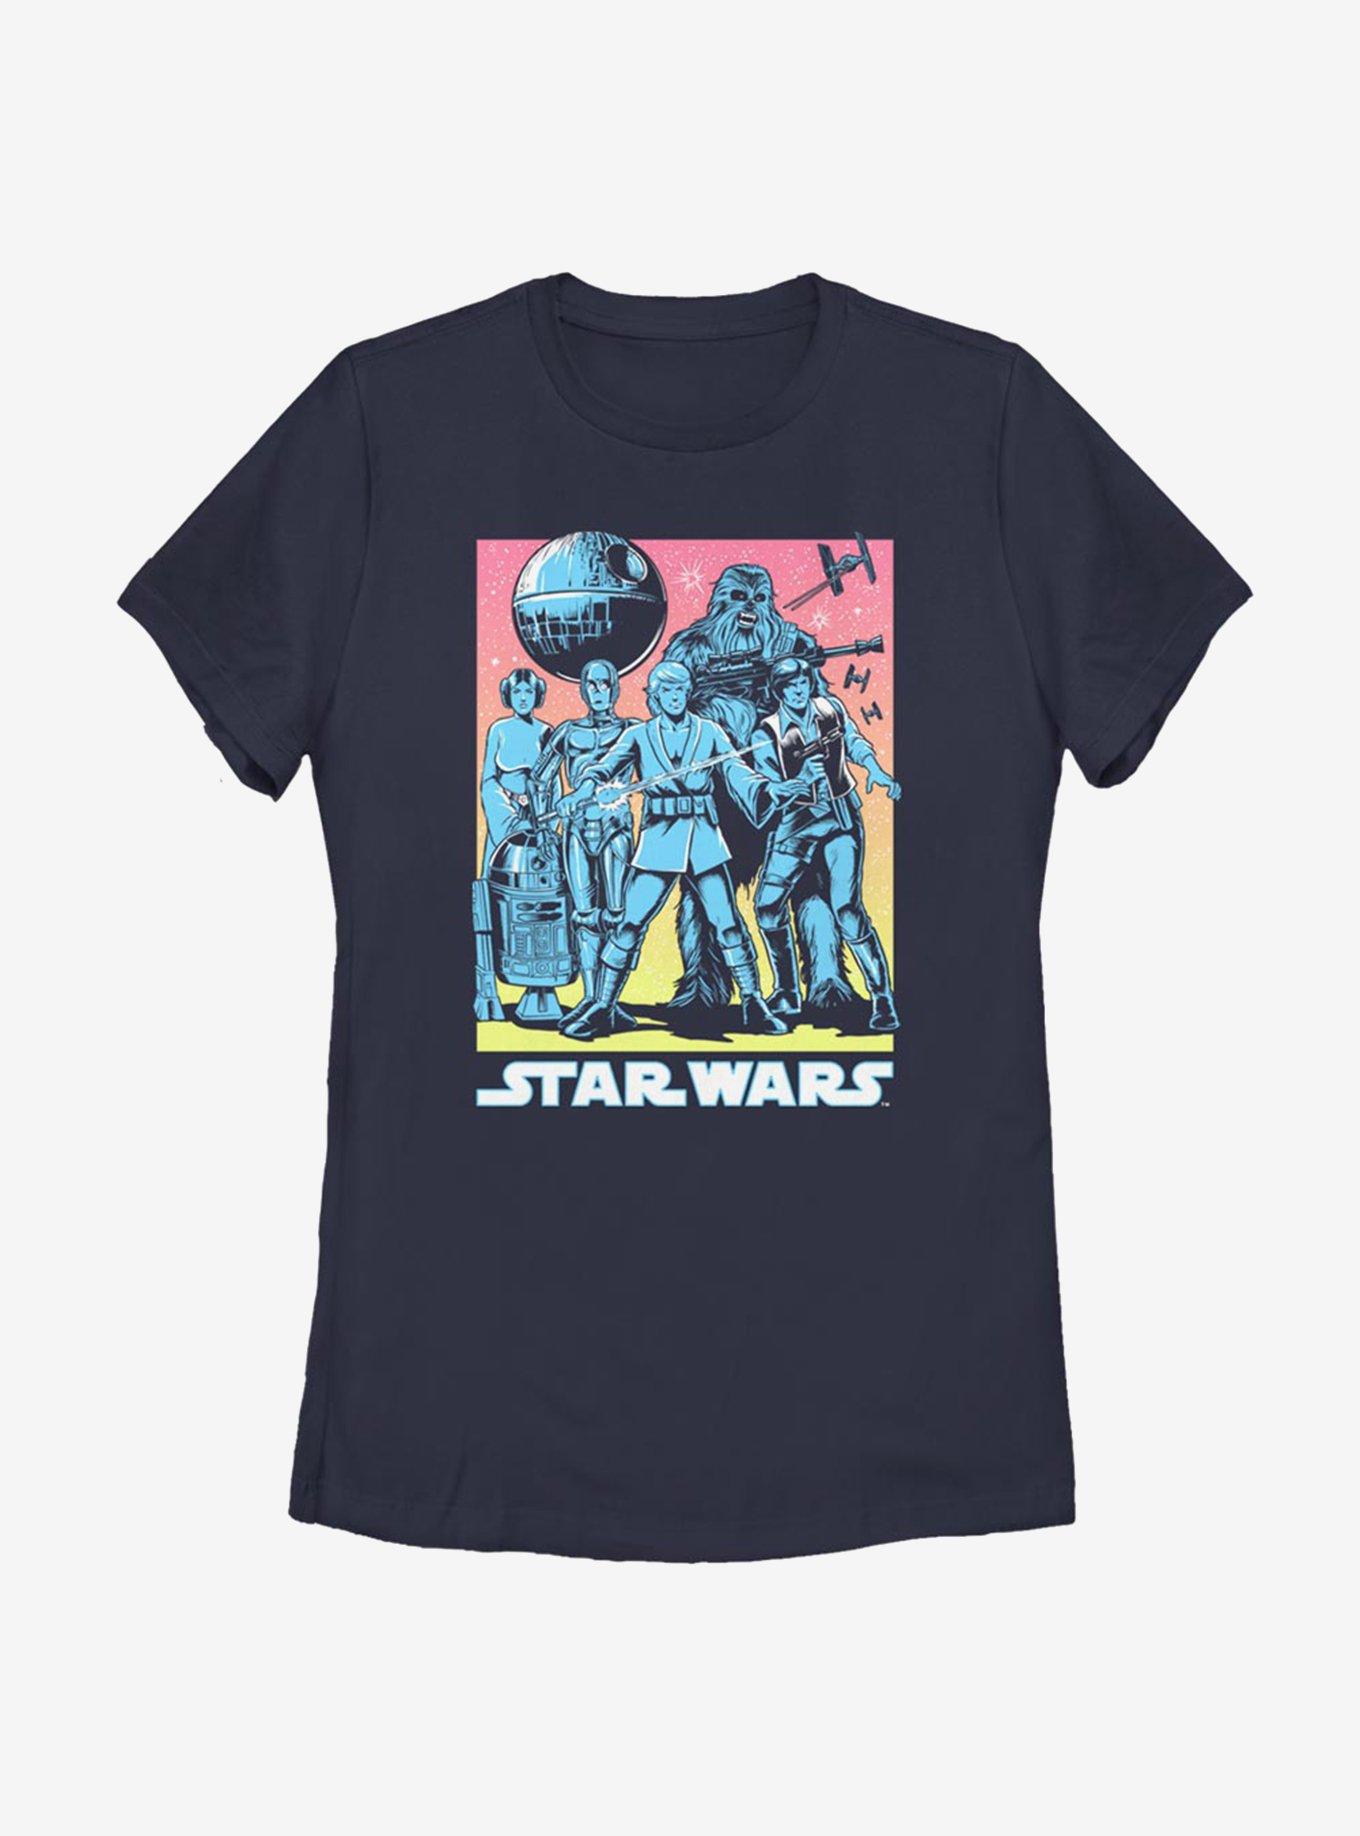 Star Wars Rebels Are Go Womens T-Shirt, NAVY, hi-res